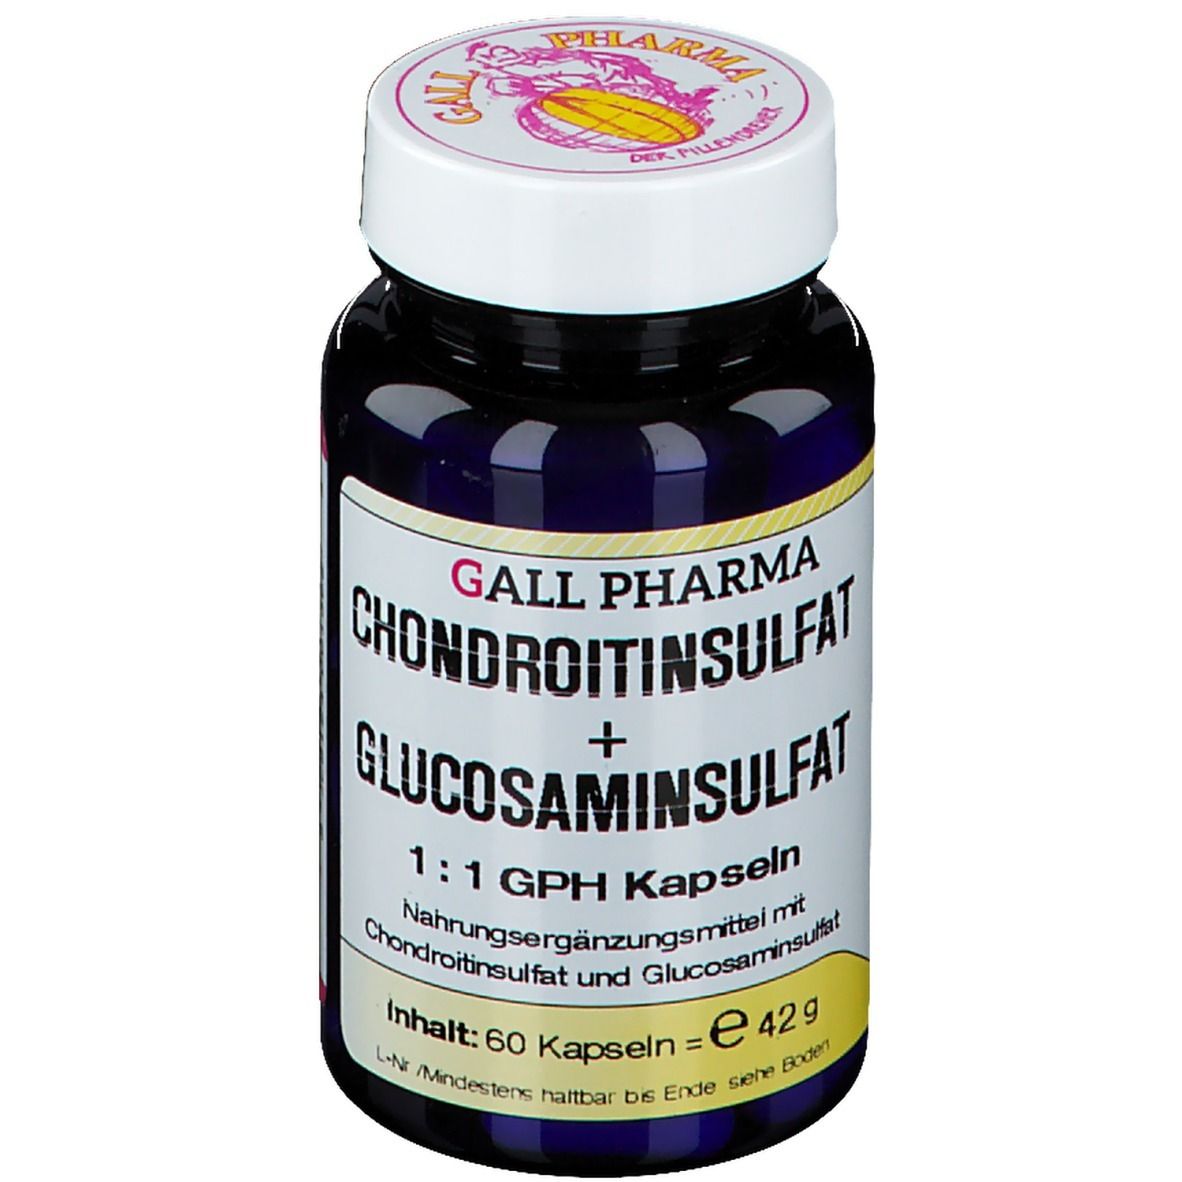 GALL PHARMA Chondroitinsulfat + Glucosaminsulfat 1:1